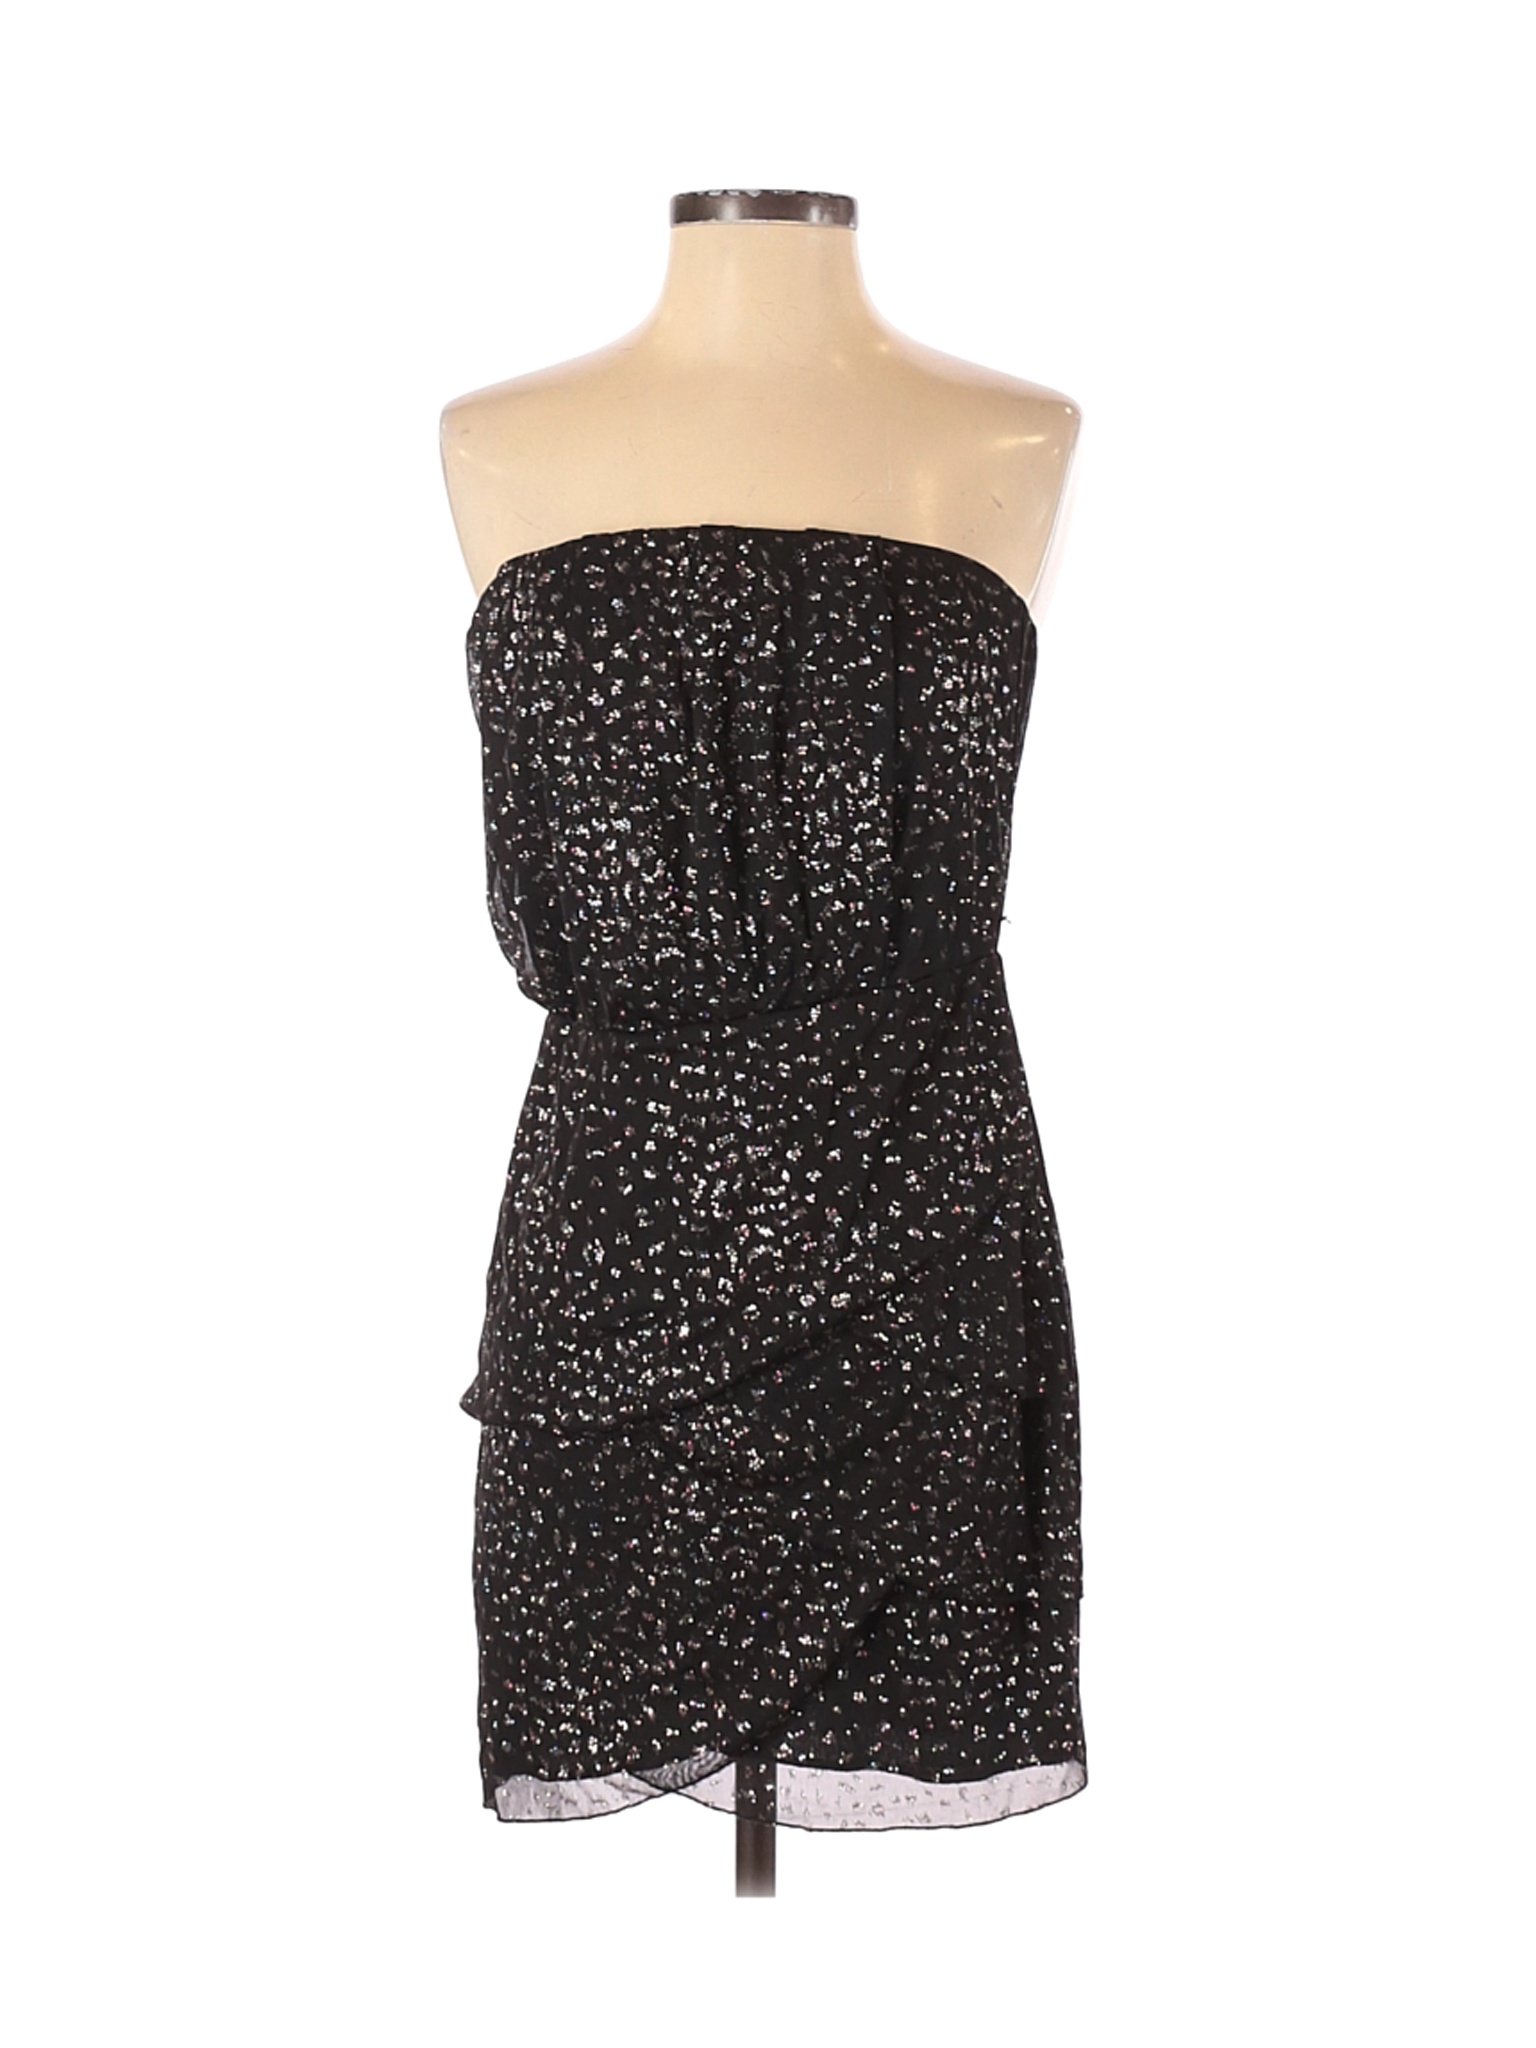 Windsor Women Black Cocktail Dress S | eBay